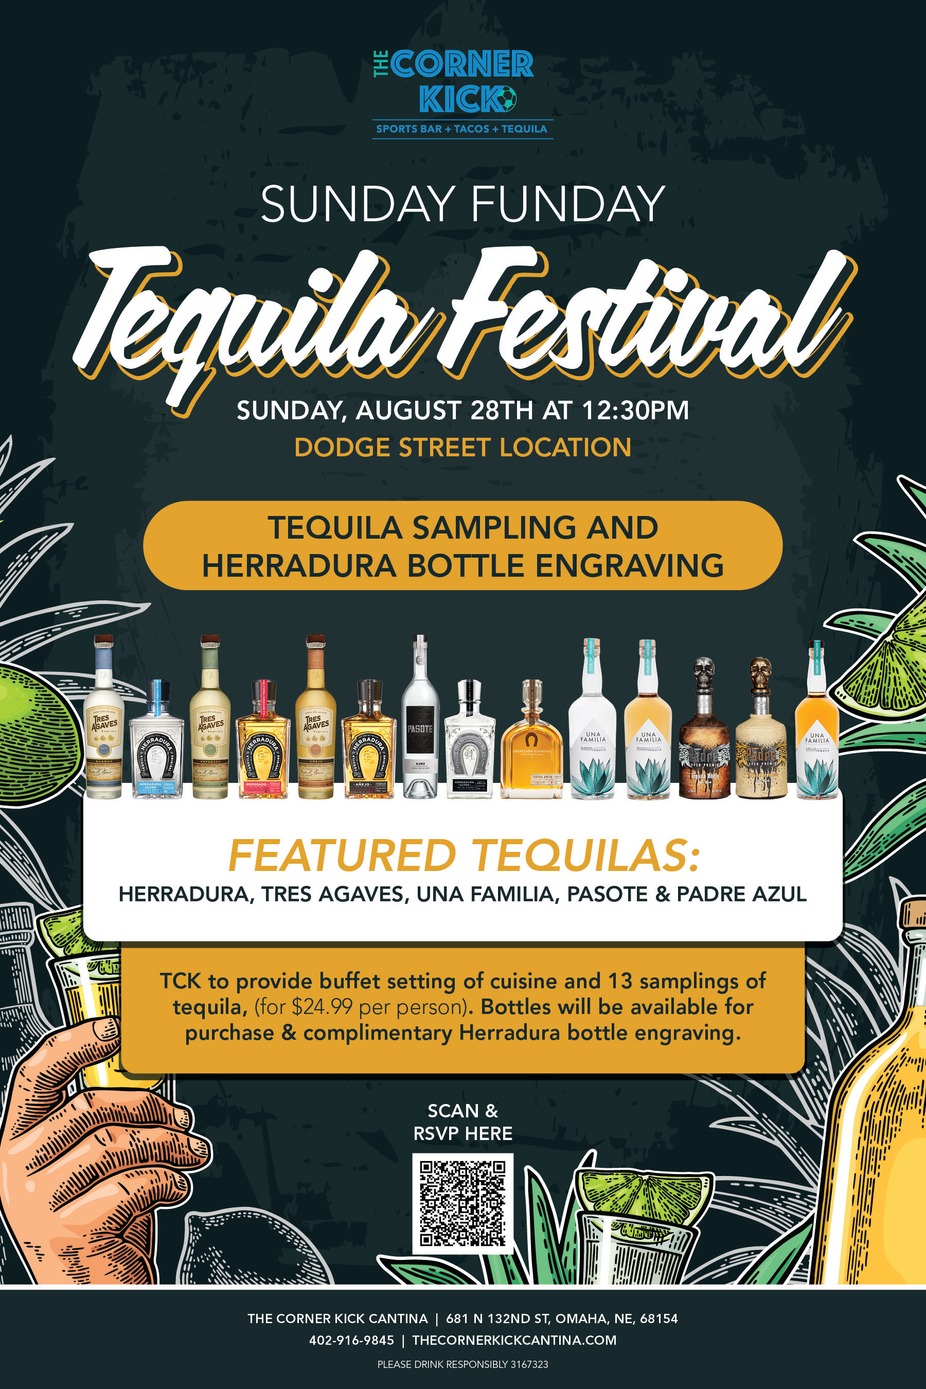 Sunday Funday Tequila Festival event photo